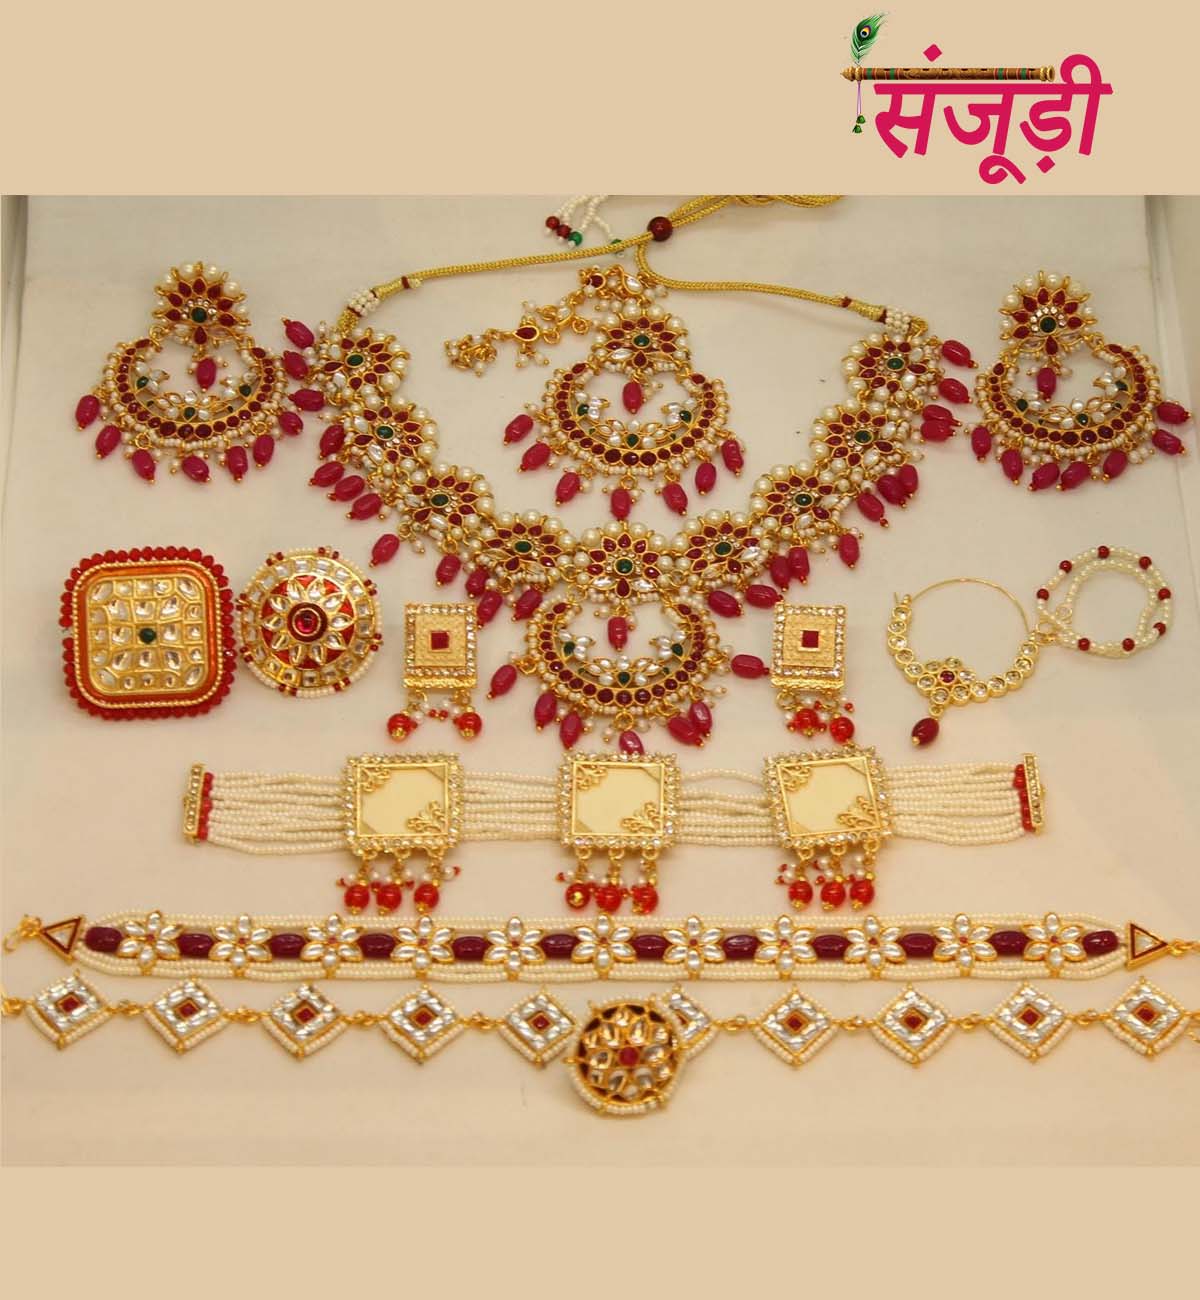 Red Rajputi Jewelry Set with Round Necklace